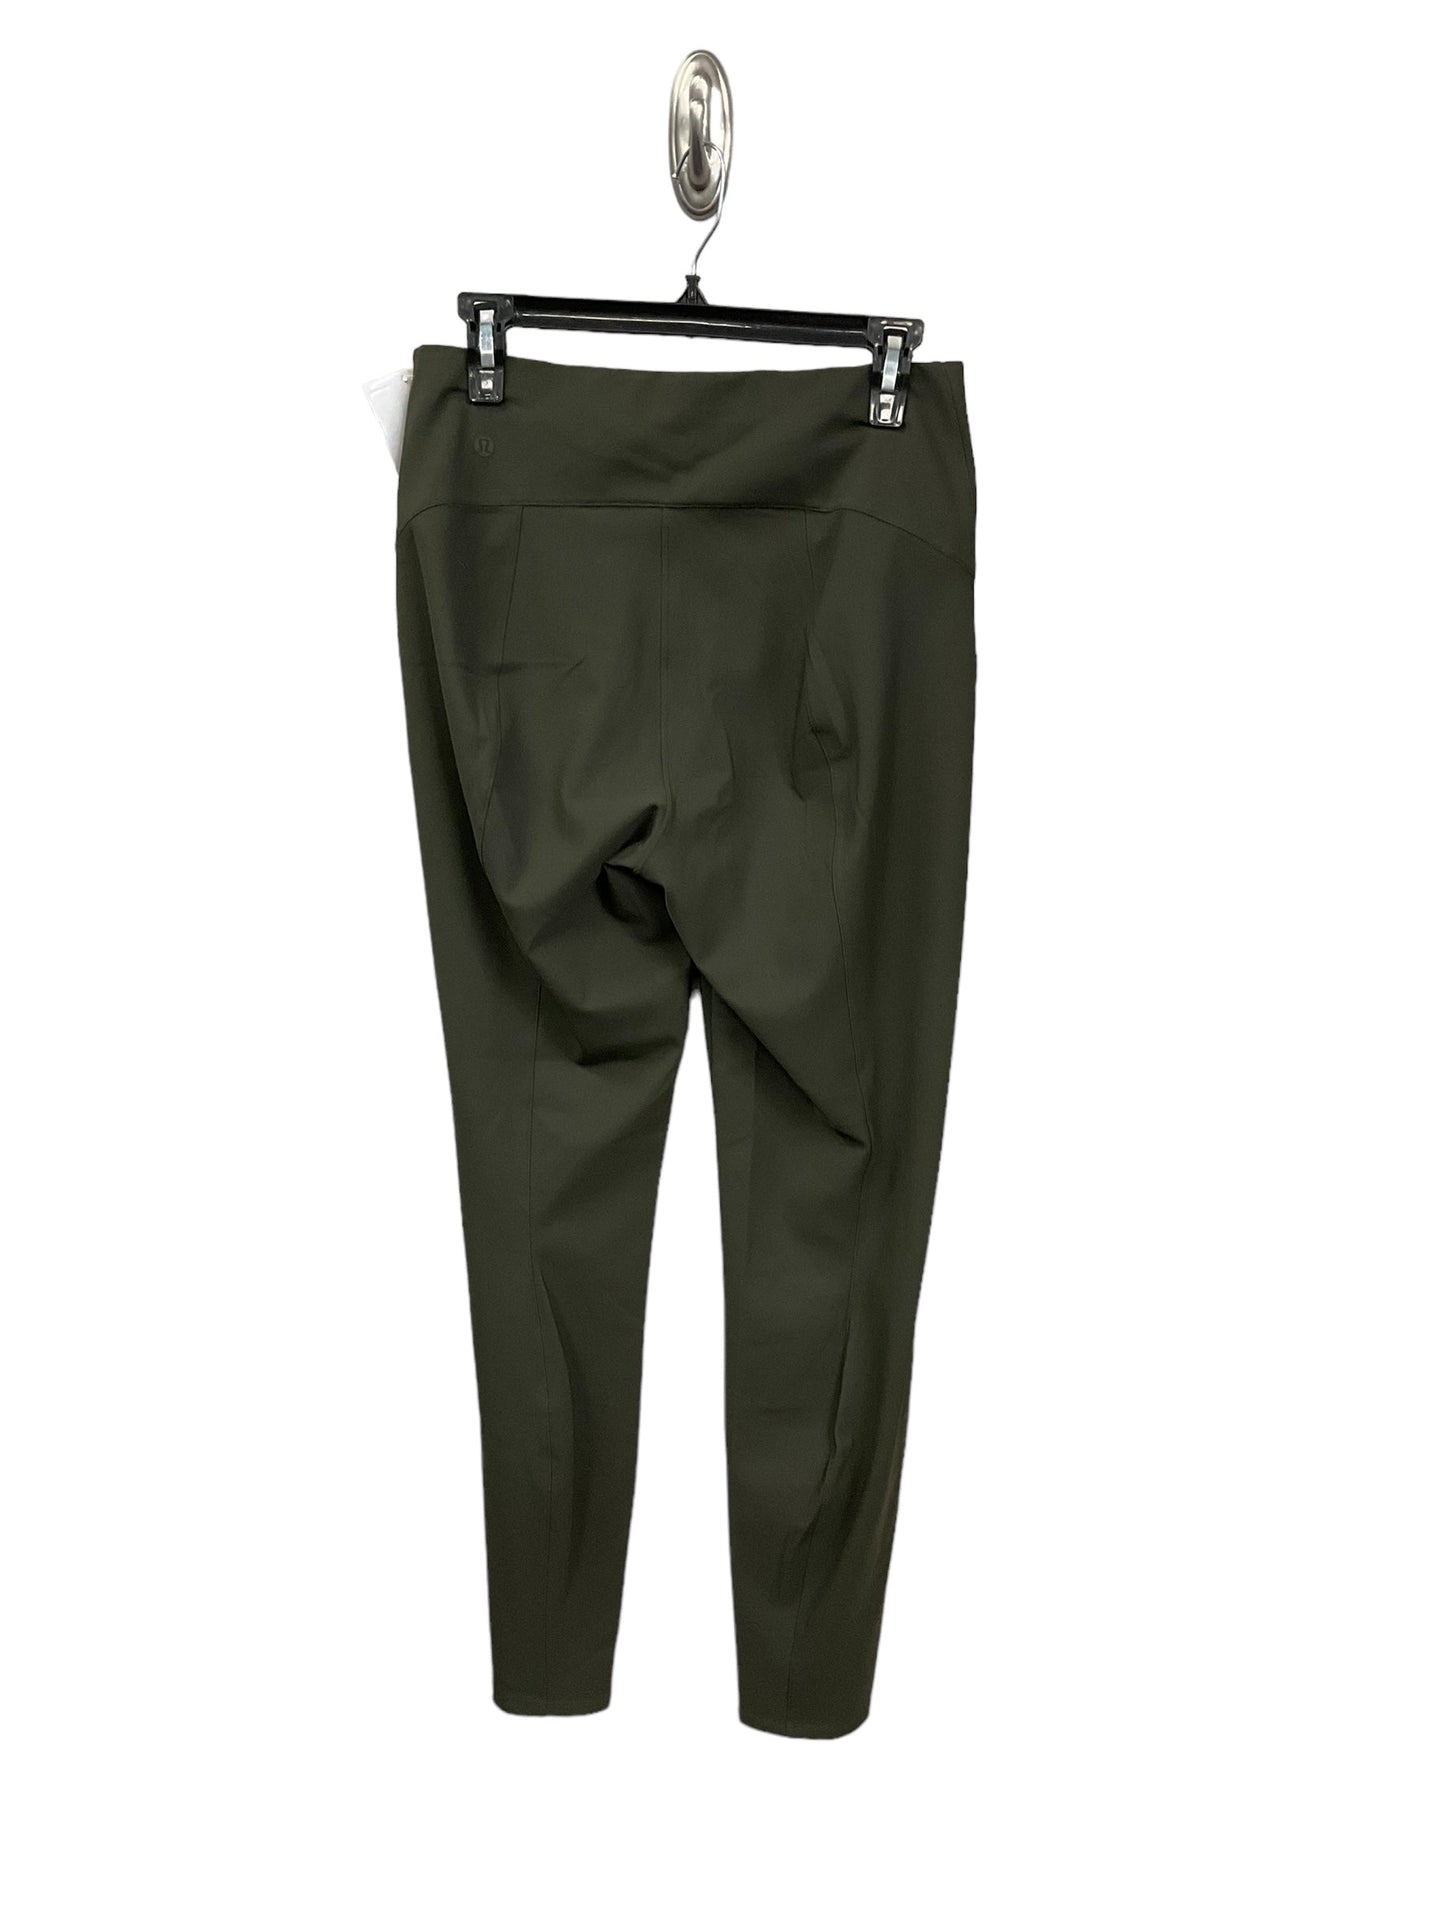 Green Athletic Pants Lululemon, Size 10